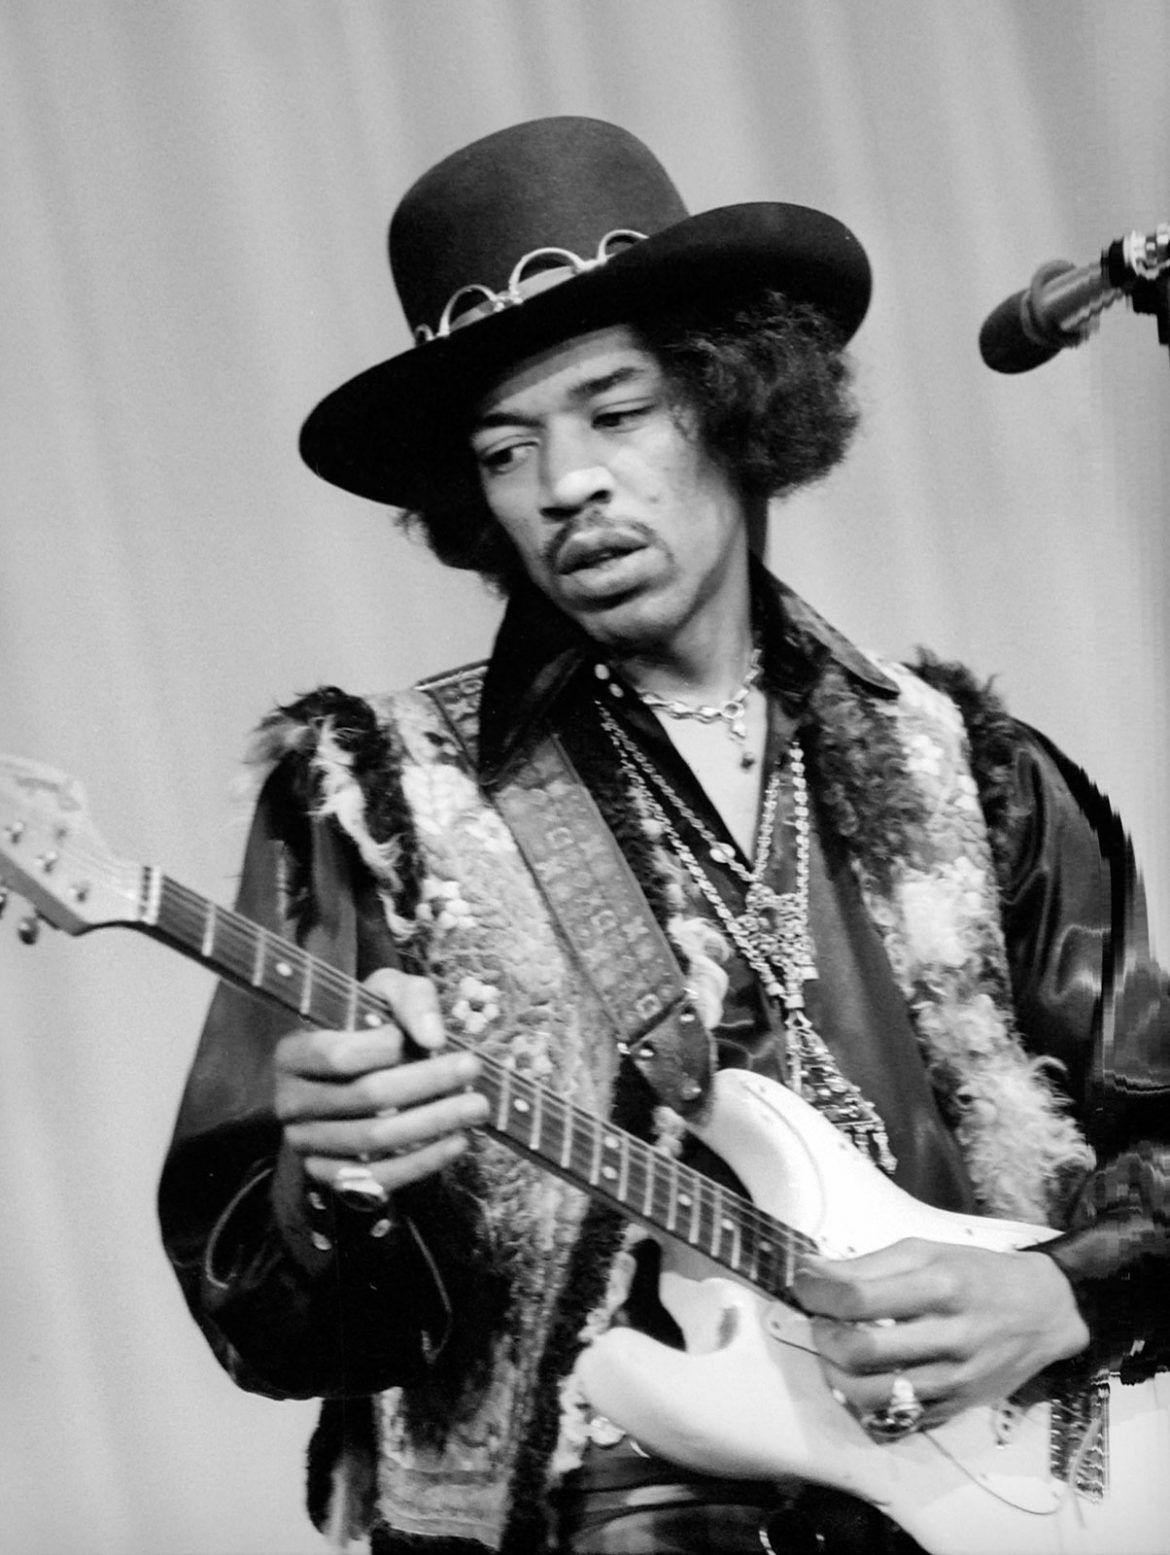 Jimi Hendrix "Earth Blues" People, Hell & Angels nuevo disco 2013